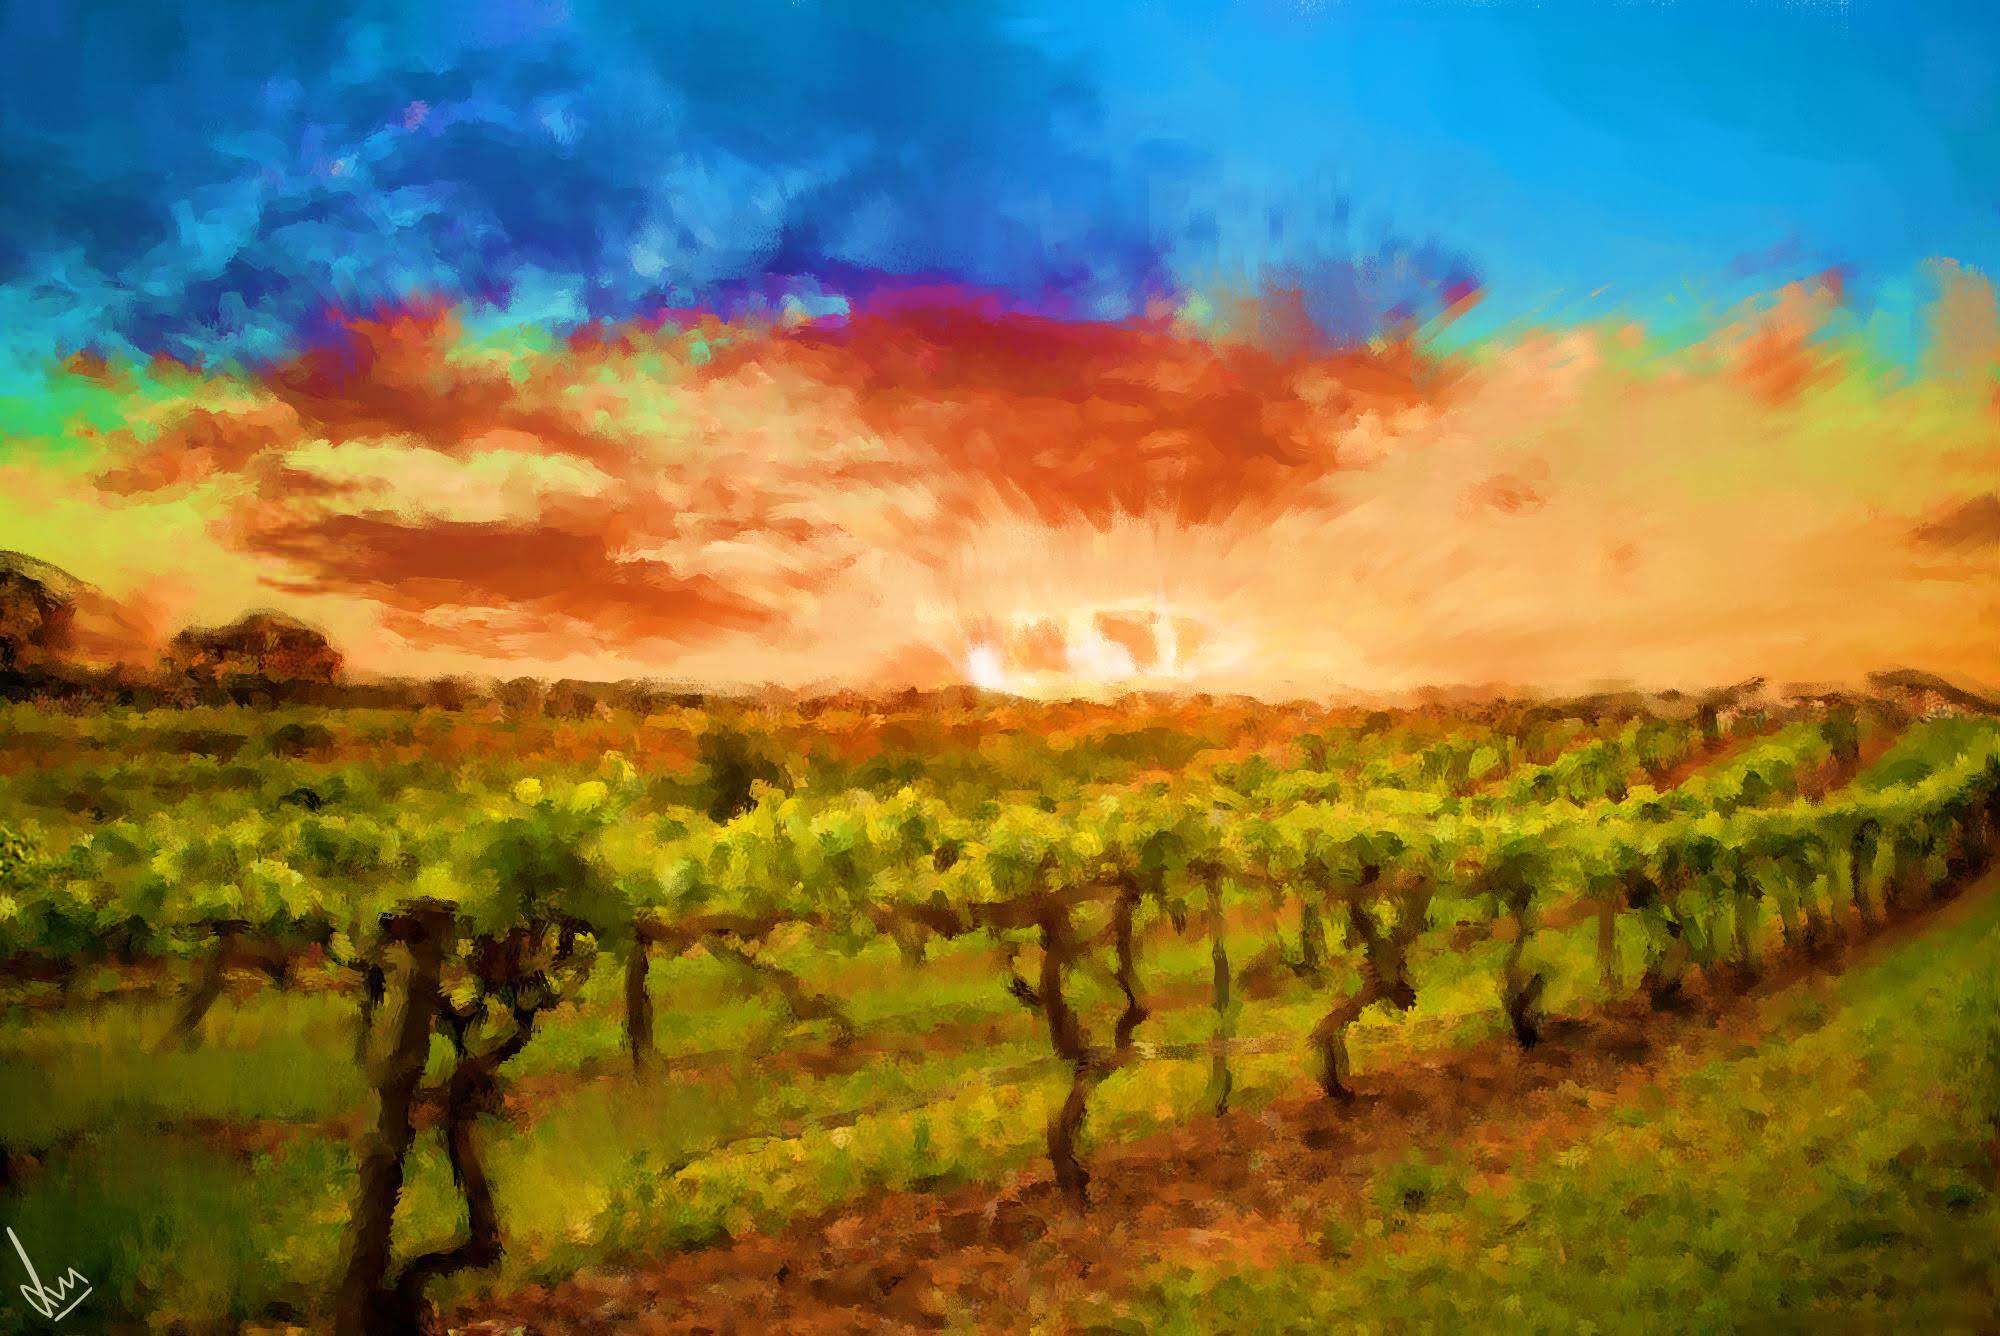 Barossa Valley Vineyards - The lovely vineyards in the heart of South Australia